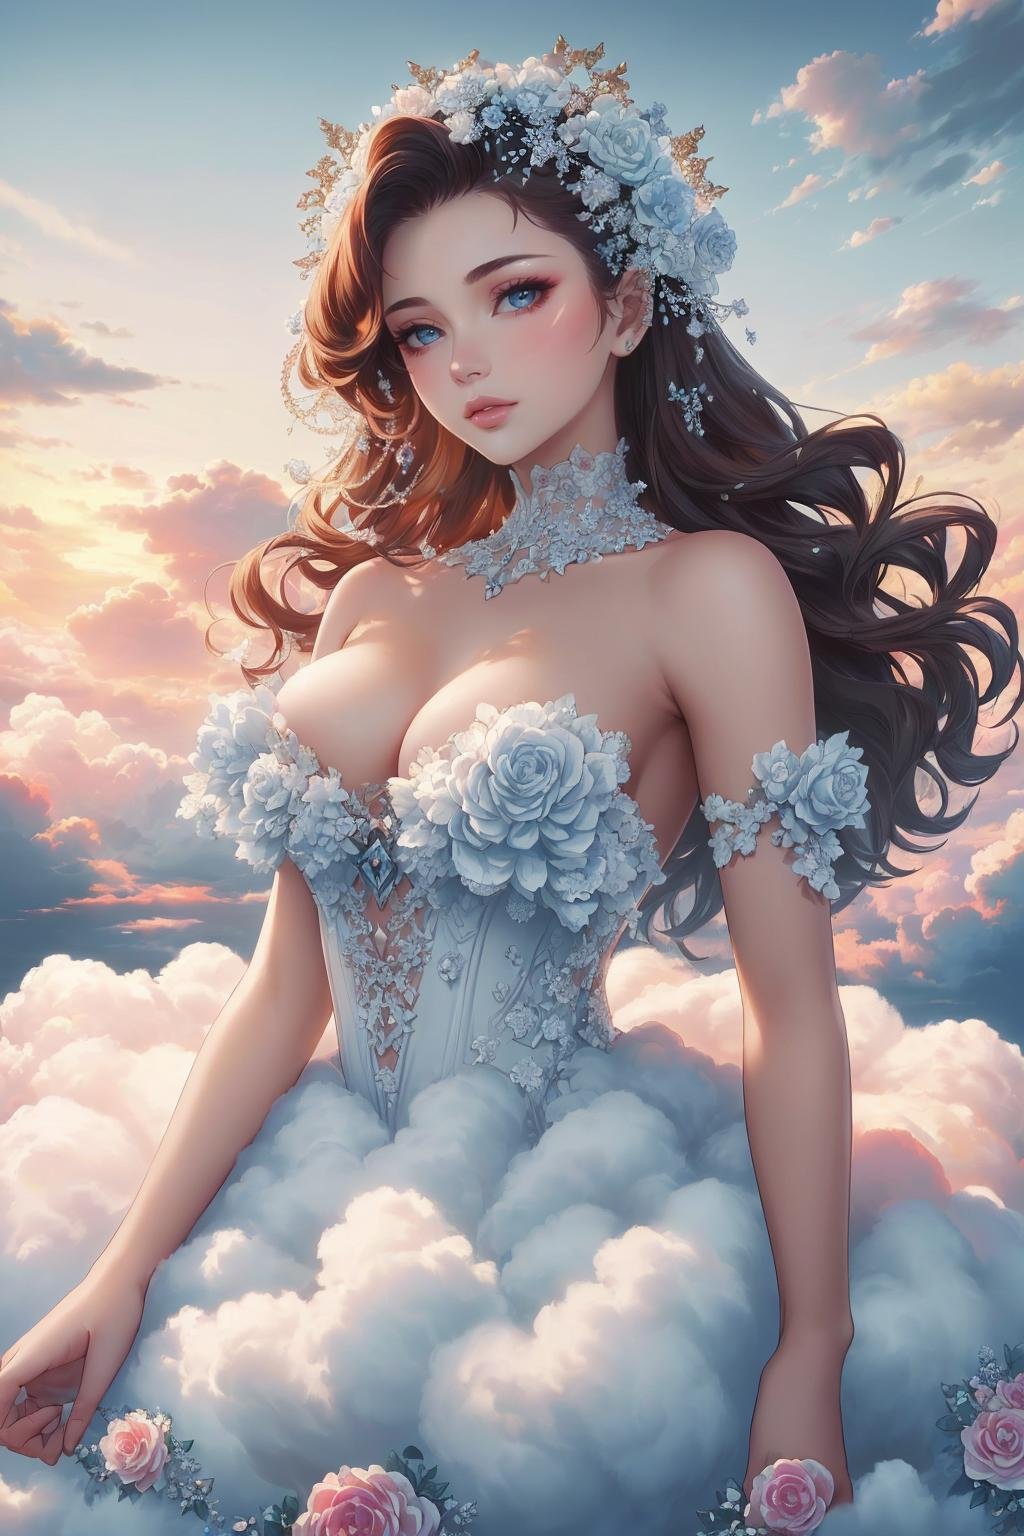 ((Masterpiece, best quality,edgQuality)), edgCloud, a woman wearing a dress made of clouds ,wearing edgCloud <lora:edgCloudDress:0.8>